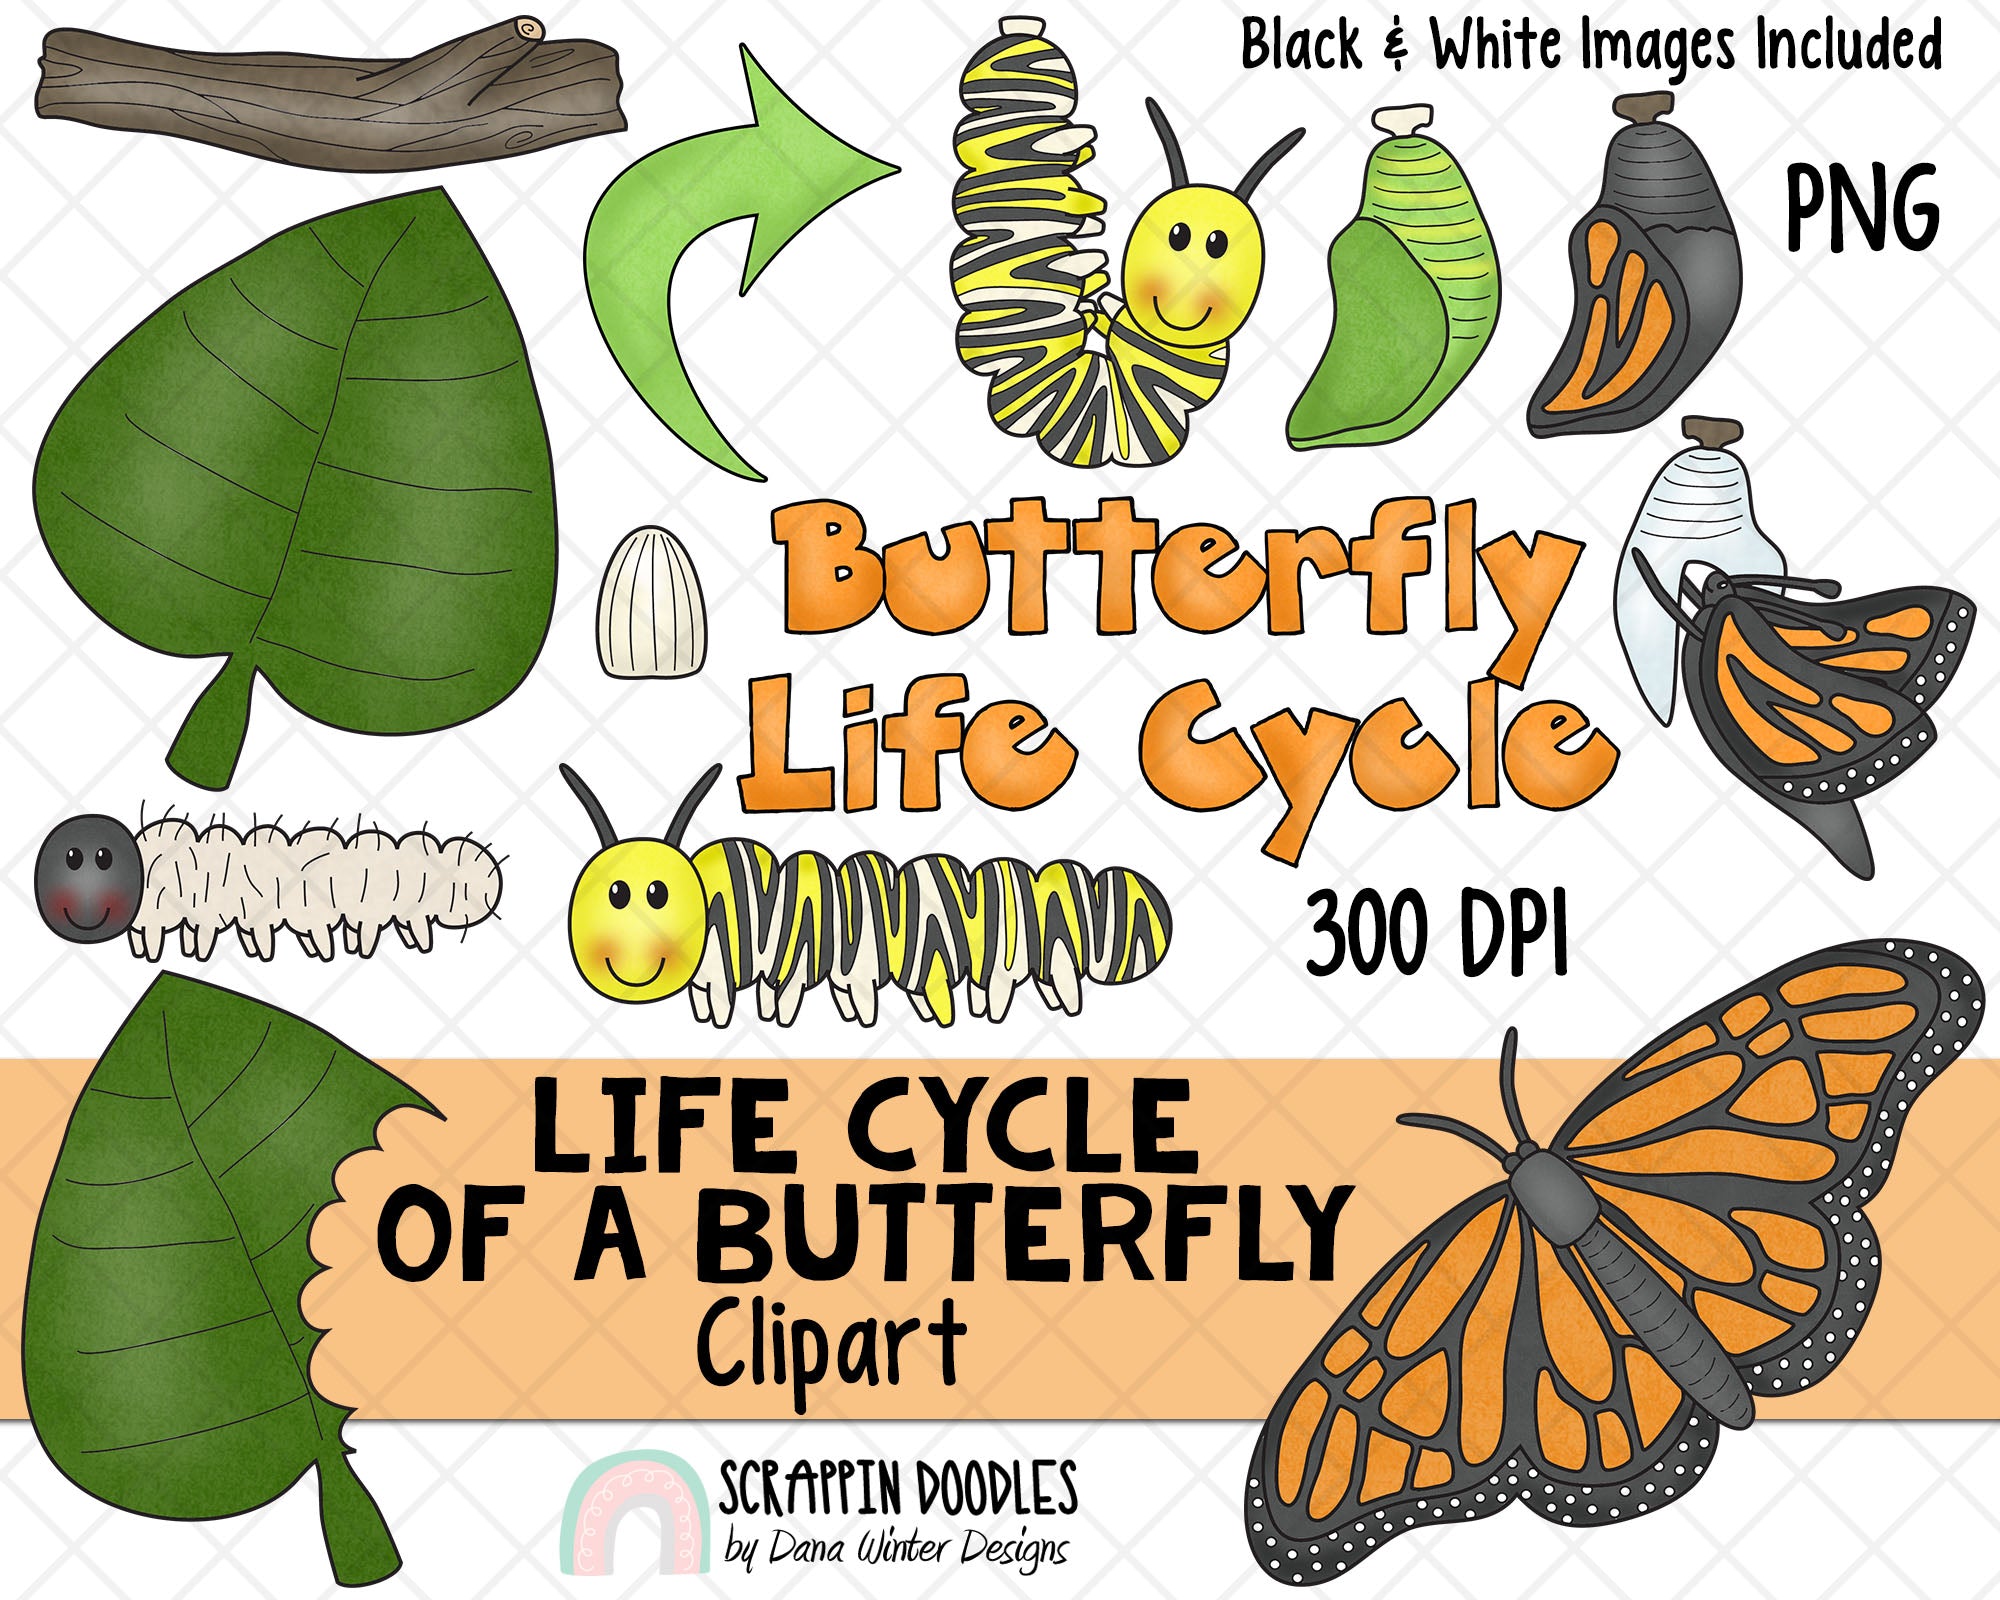 butterfly metamorphosis clipart